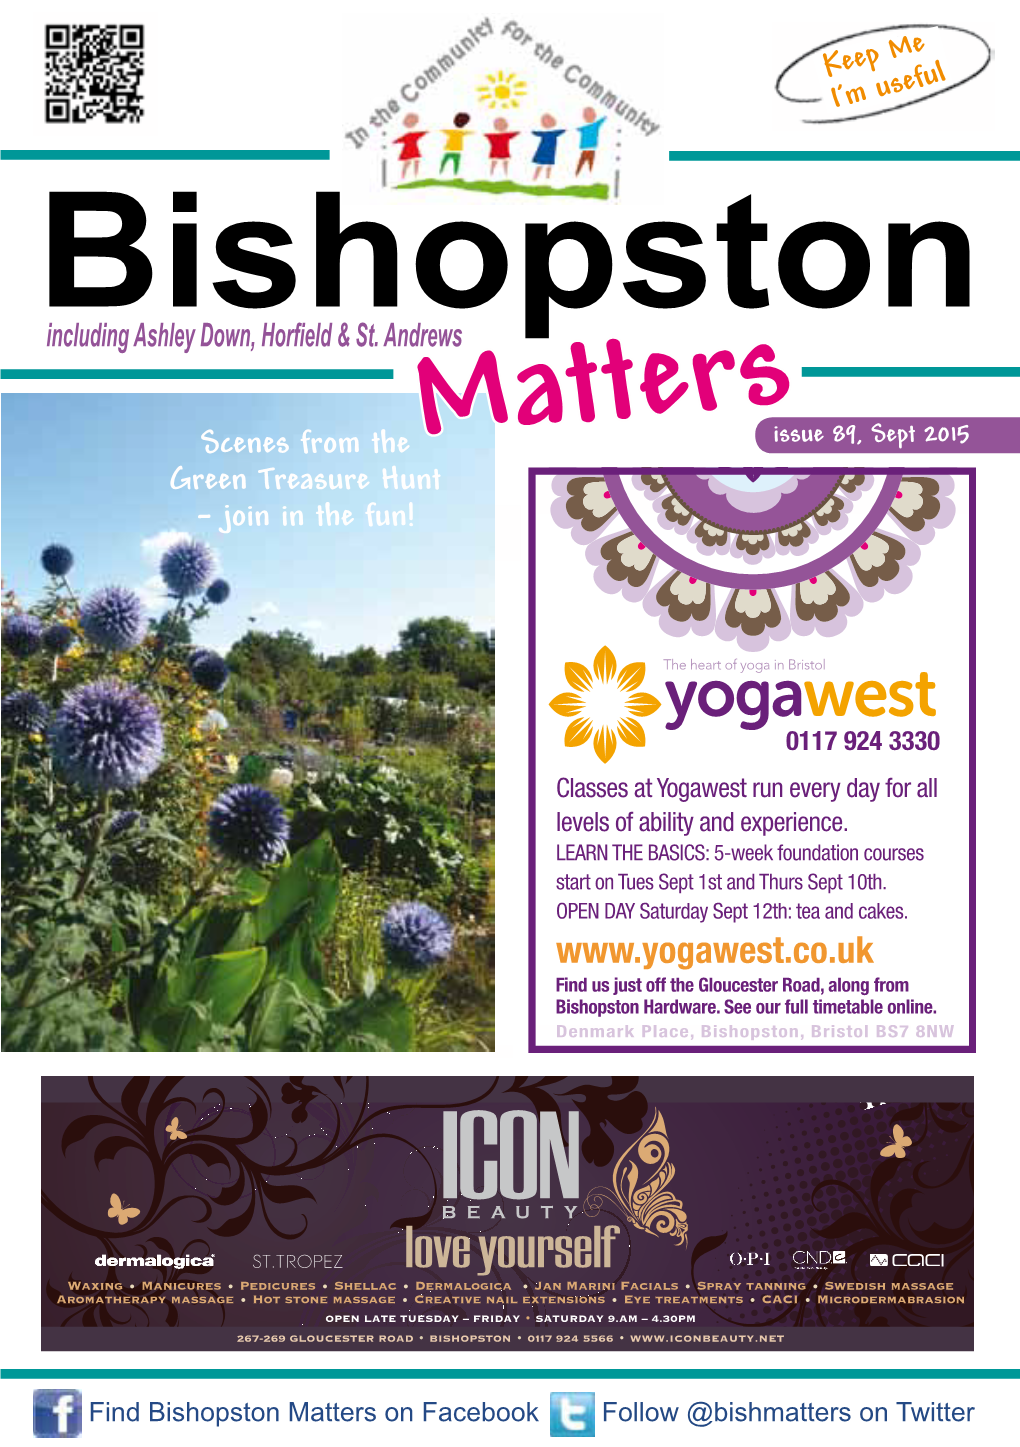 Bishopston Matters on Facebook Follow @Bishmatters on Twitter Please Follow @Bishmatters on Twitter, Dear Readers